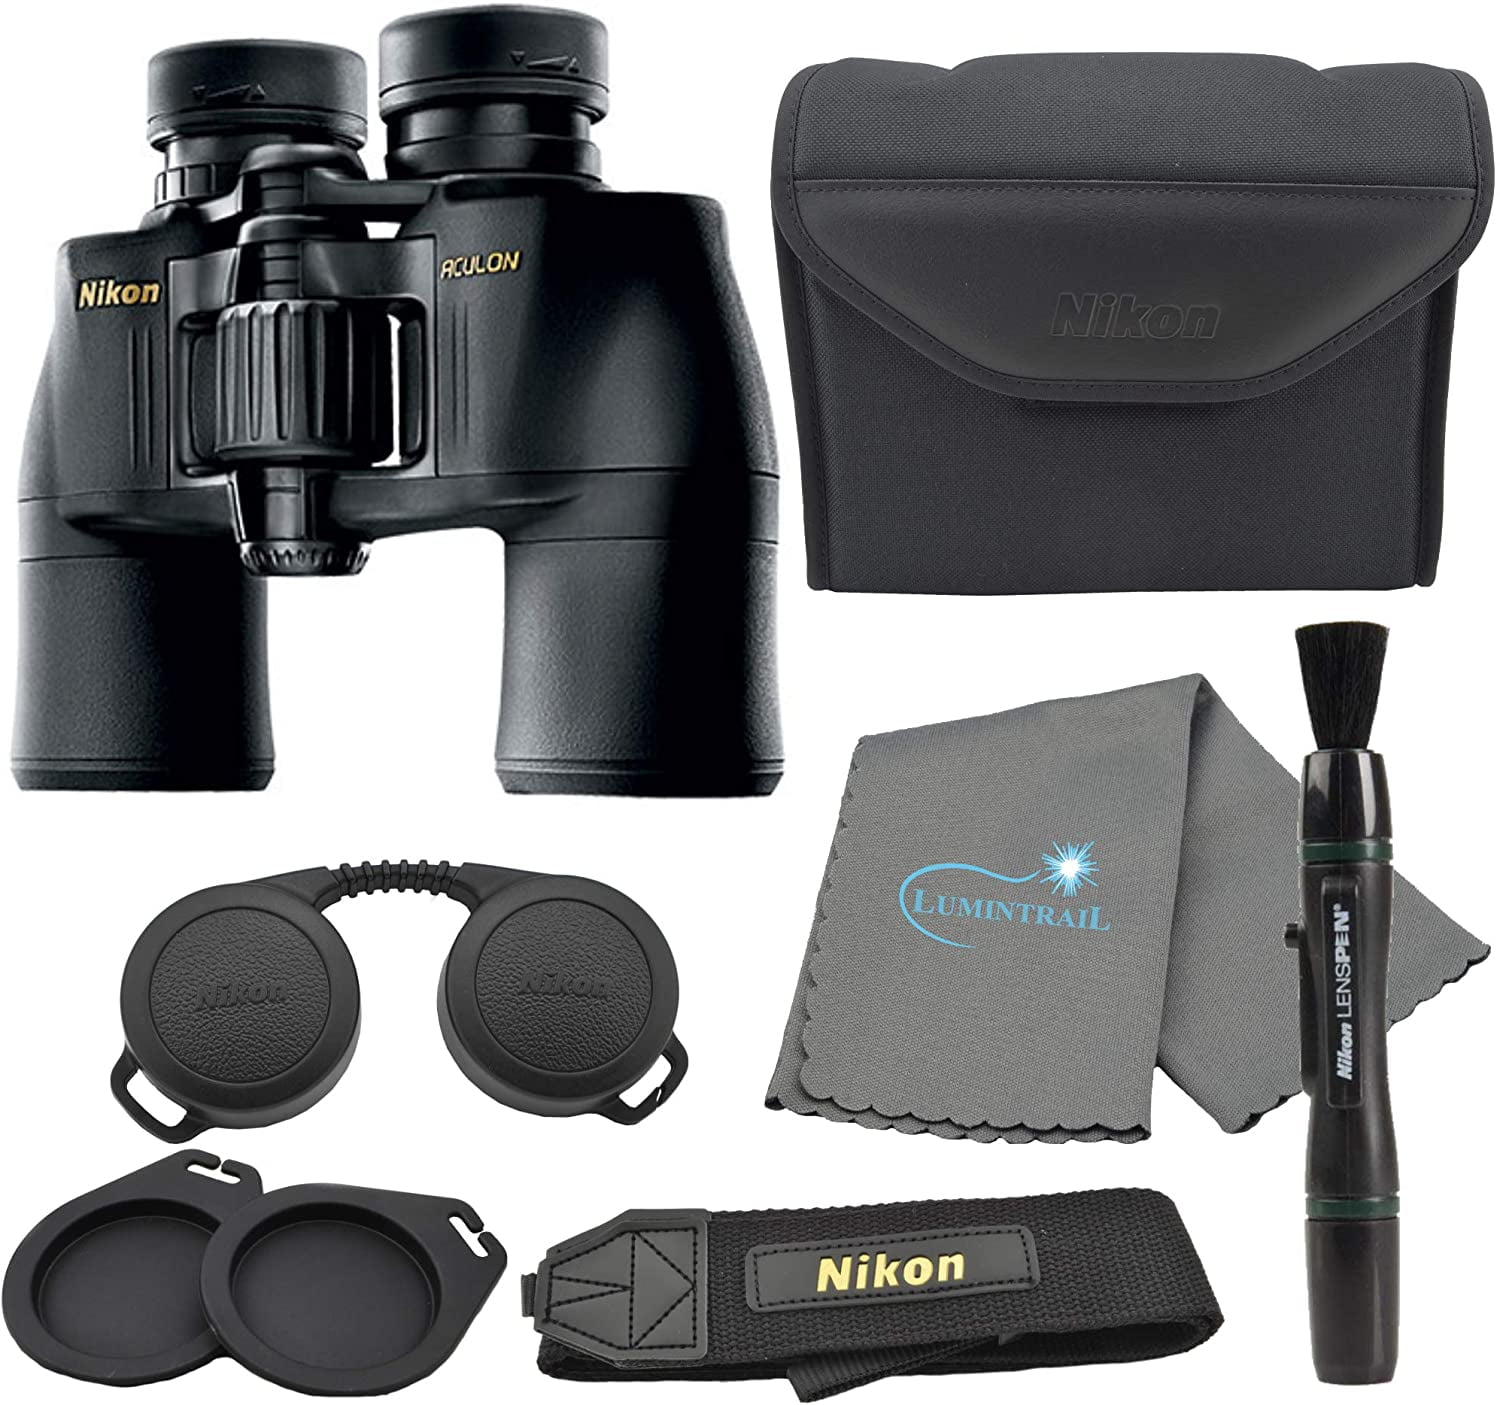 Nikon Aculon A211 10x42 Binoculars Black (8246) Bundle with a Nikon Lens Pen and Lumintrail Cleaning Cloth